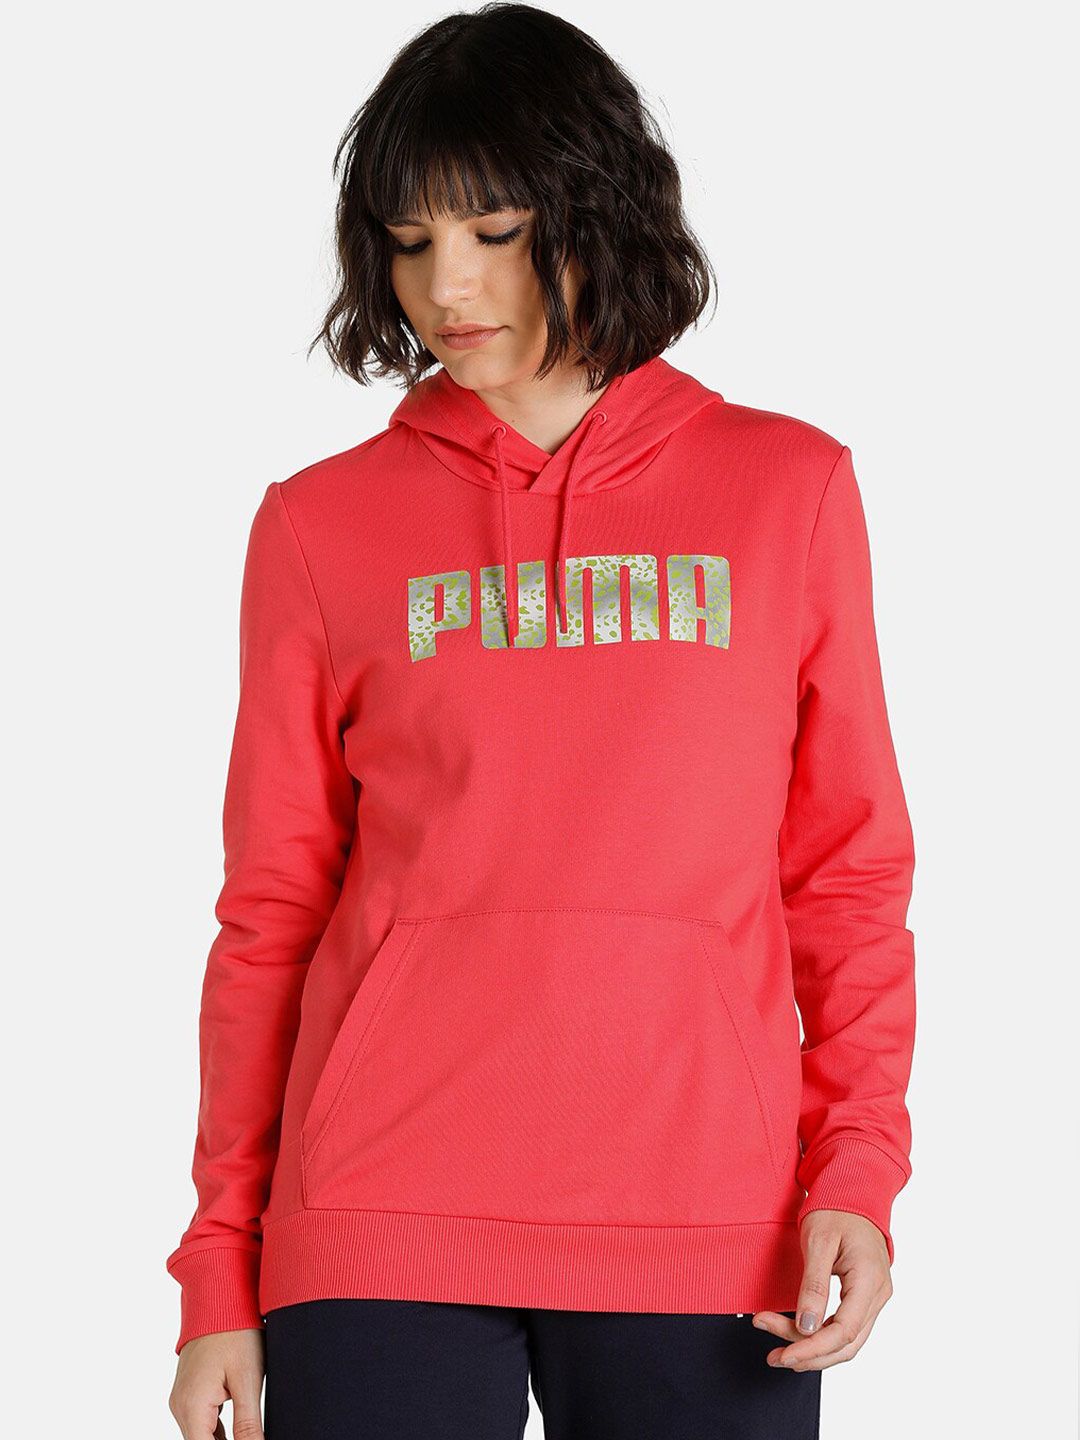 Puma Women Pink Printed Hooded Cotton Sweatshirt Price in India